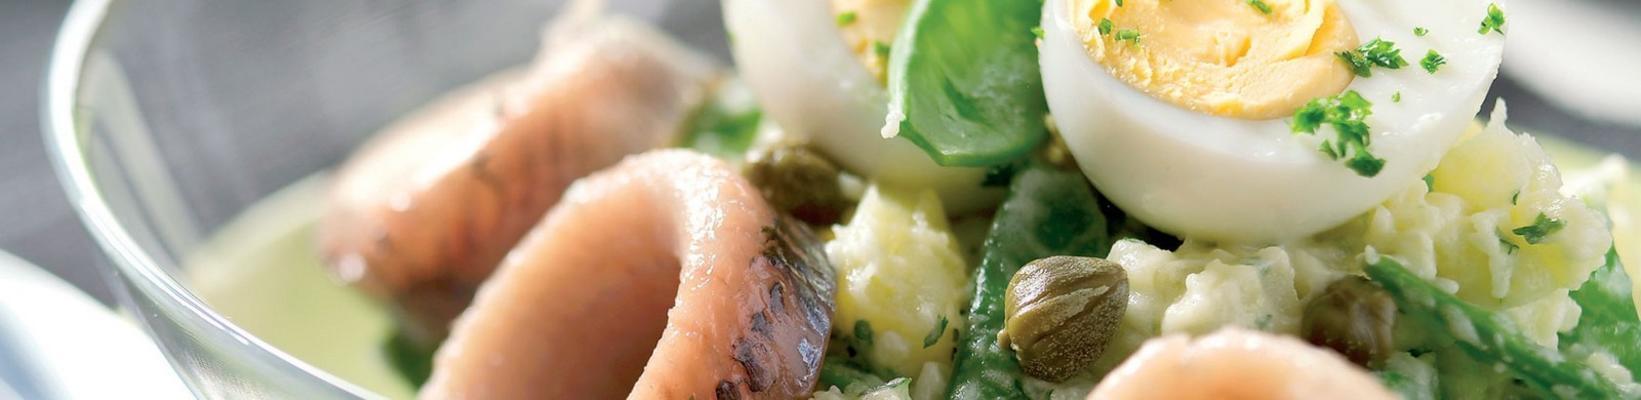 potato salad with herring and snow peas